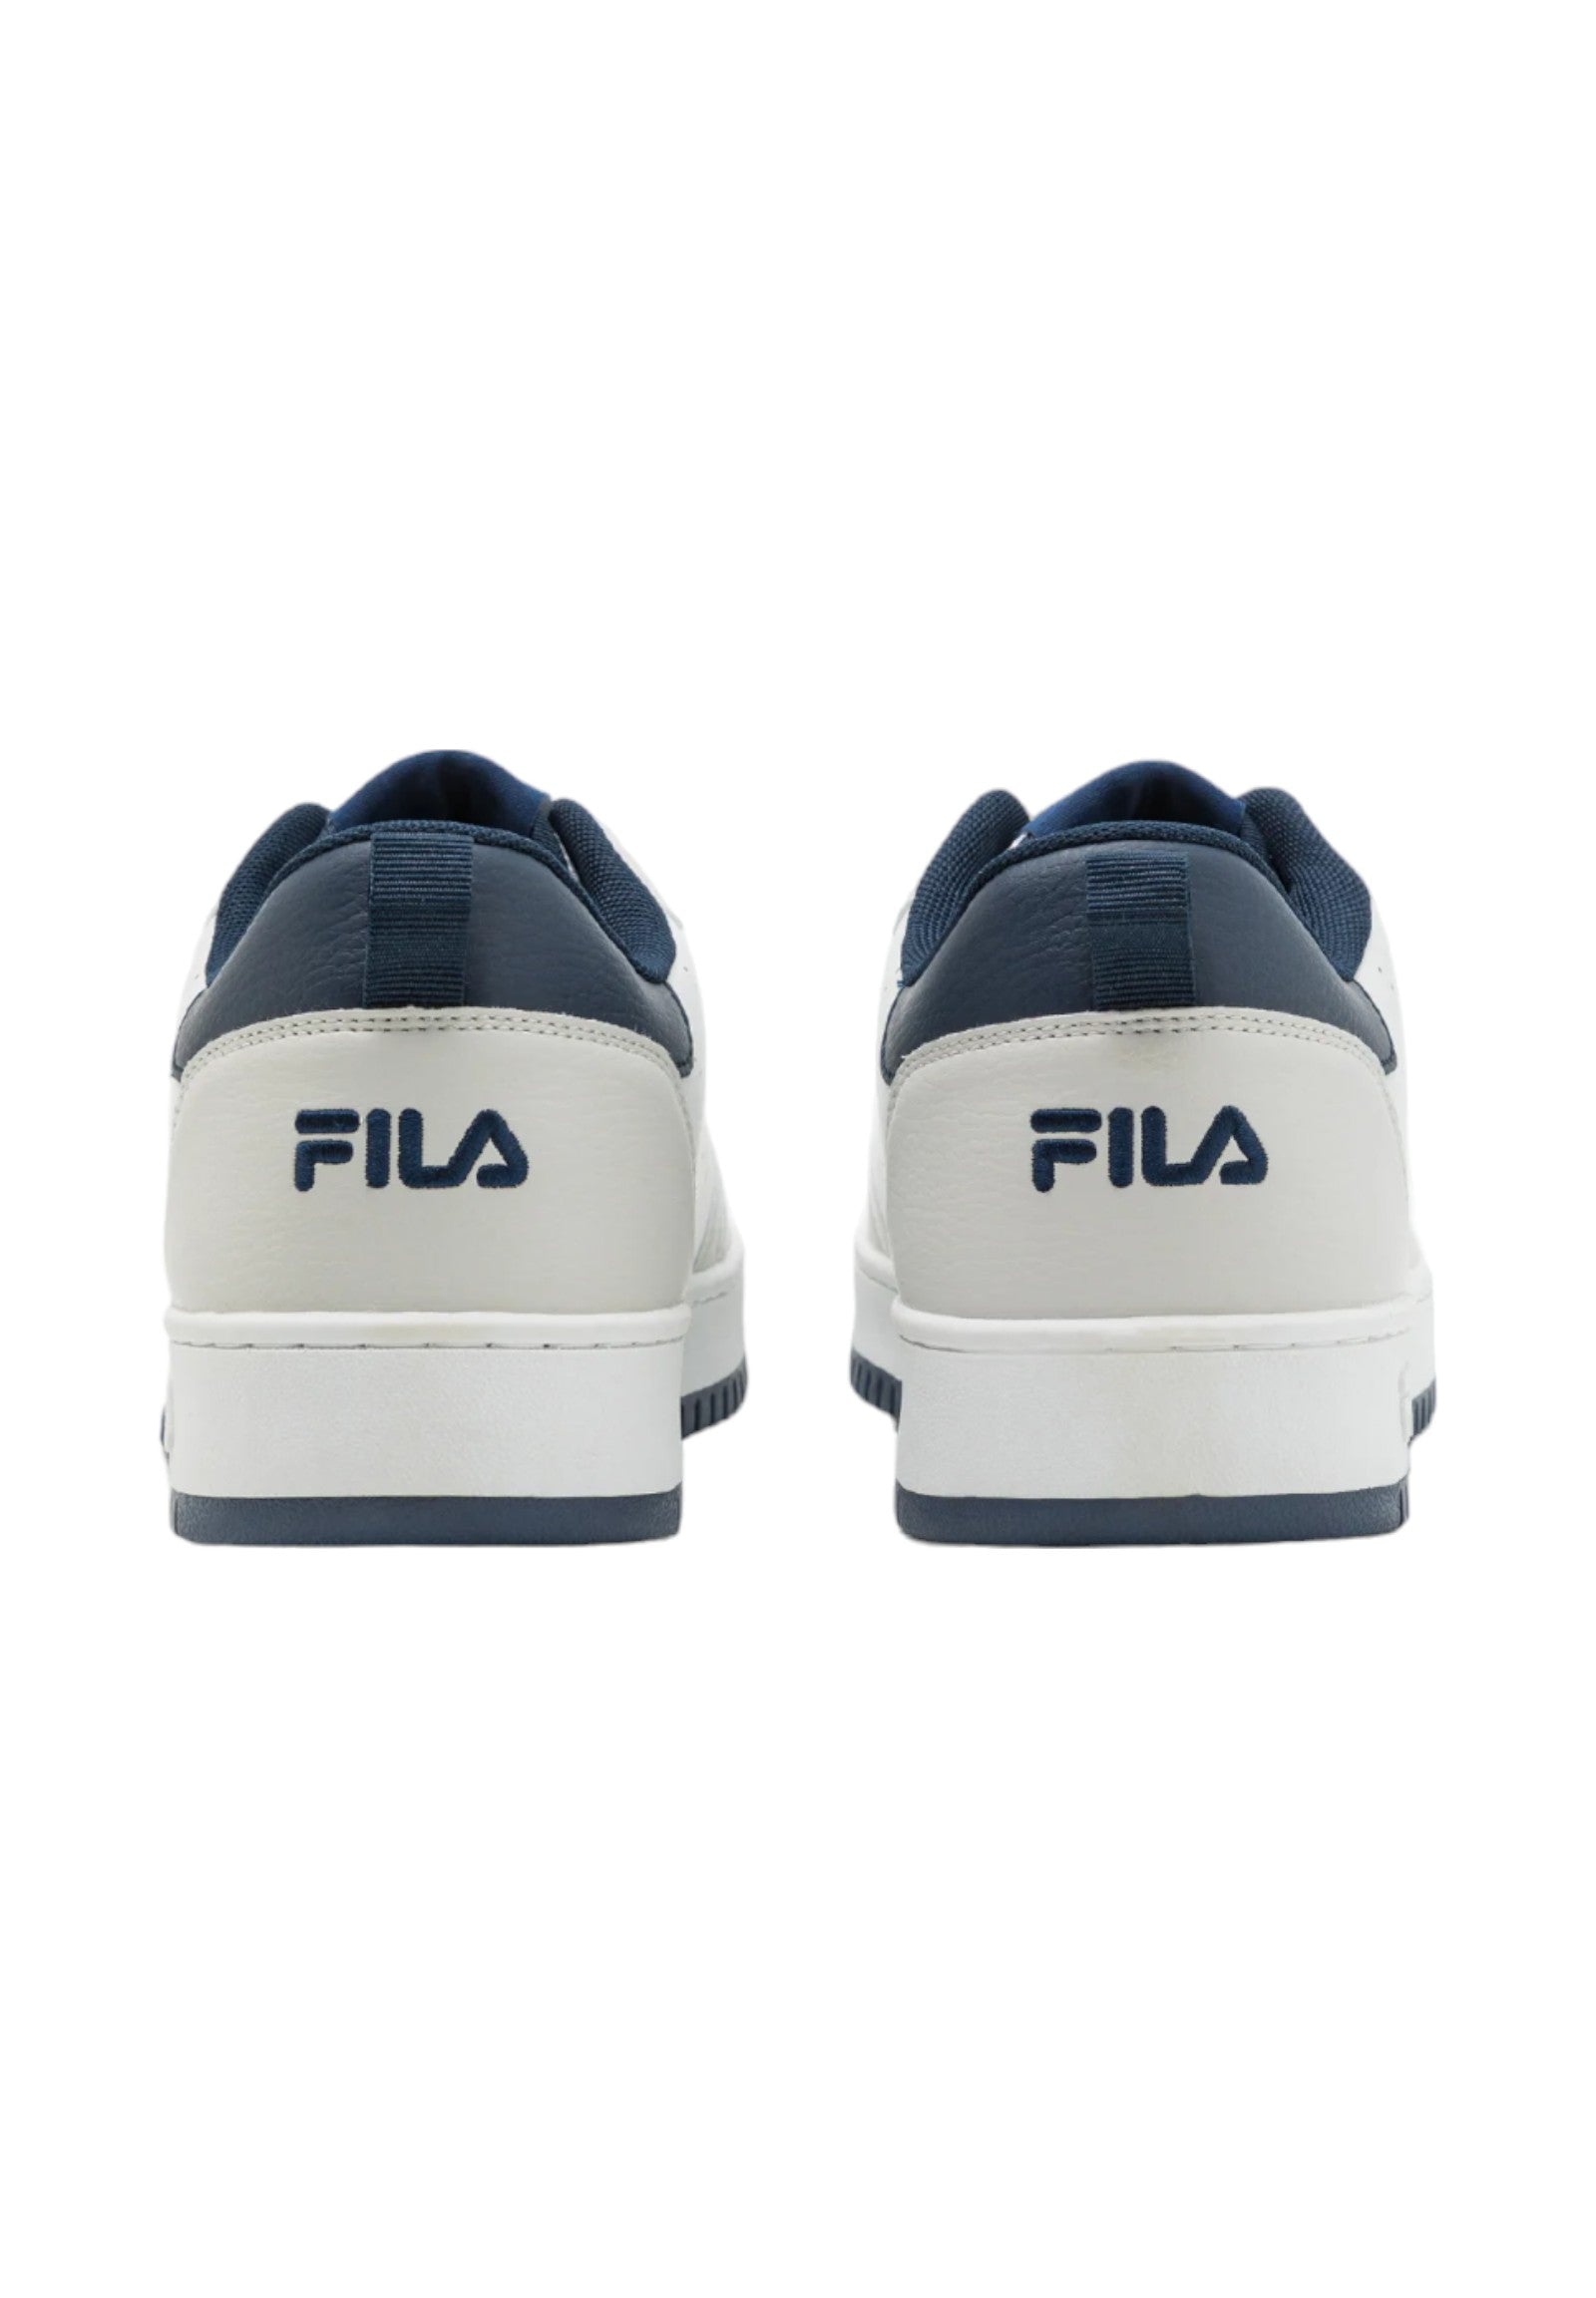 Fila Sneakers Ffm0308 White, Fila Navy